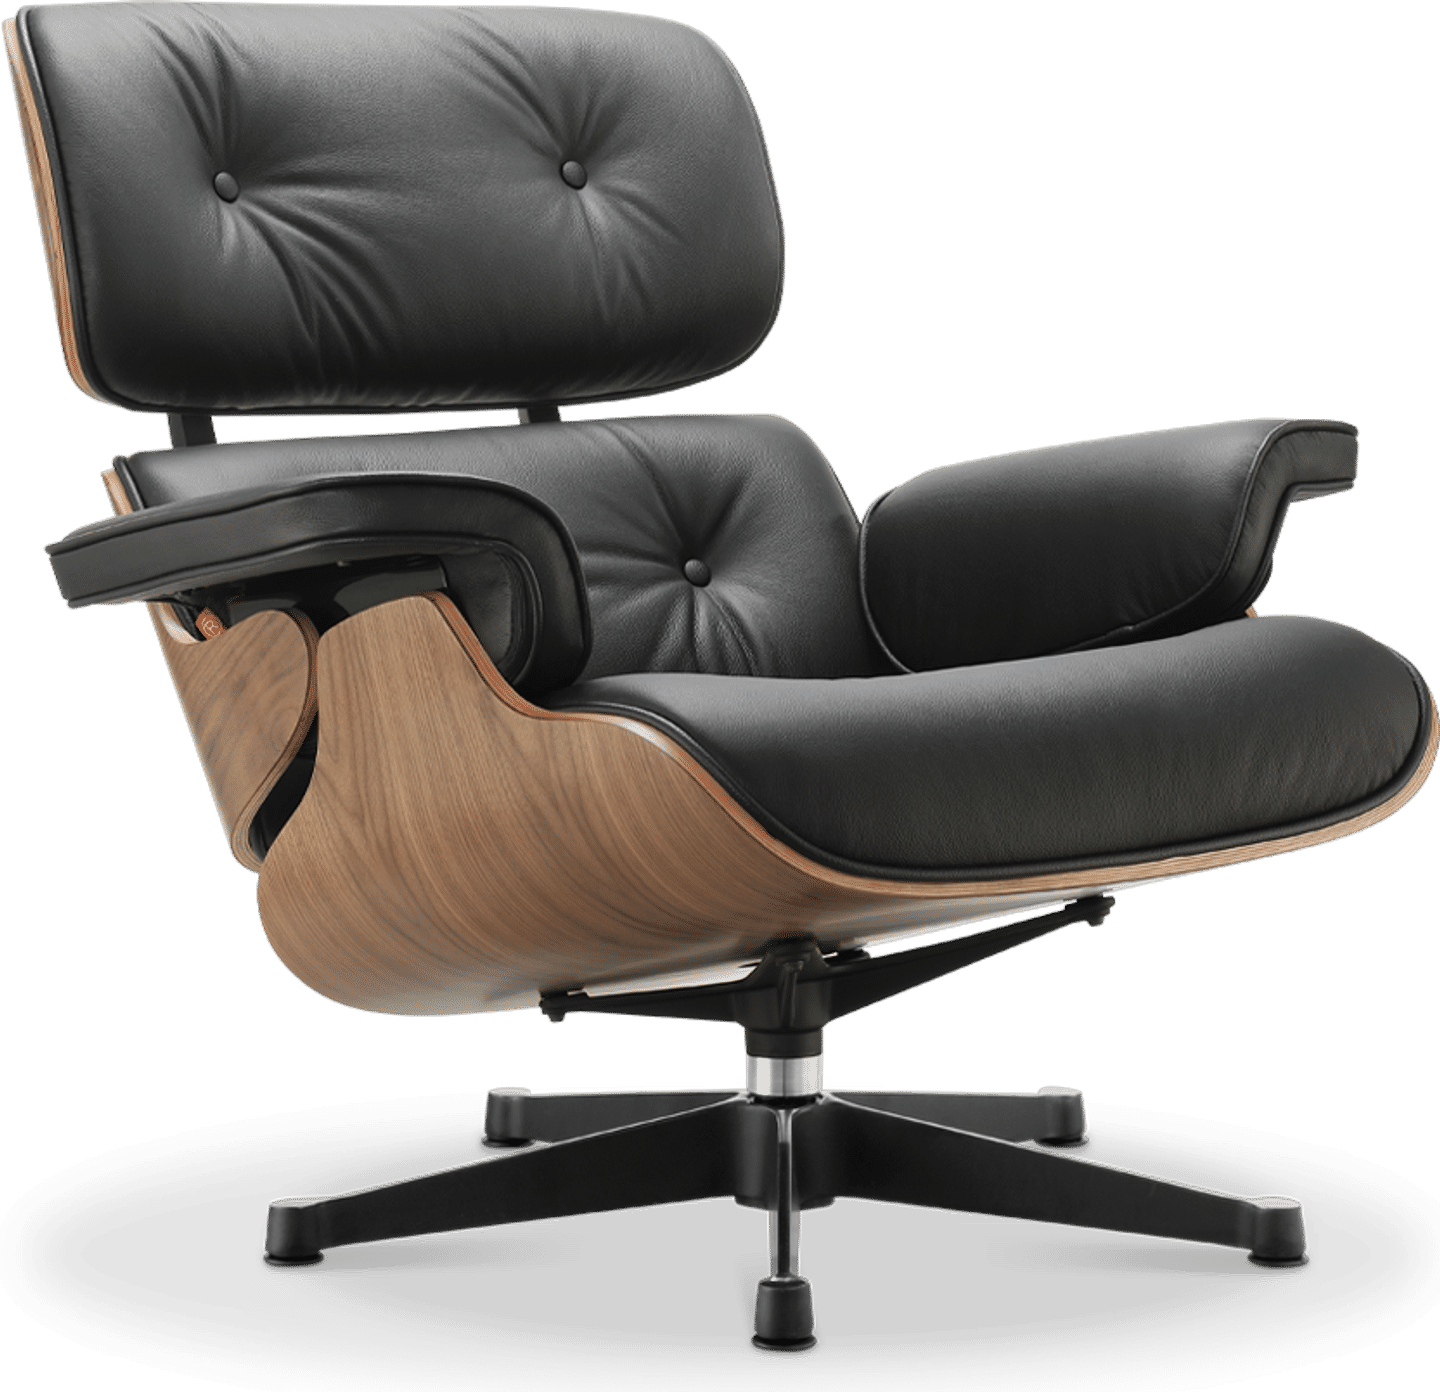 Eames stil Lounge Chair 670 Italian Leather/Black/Walnut Veneer image.